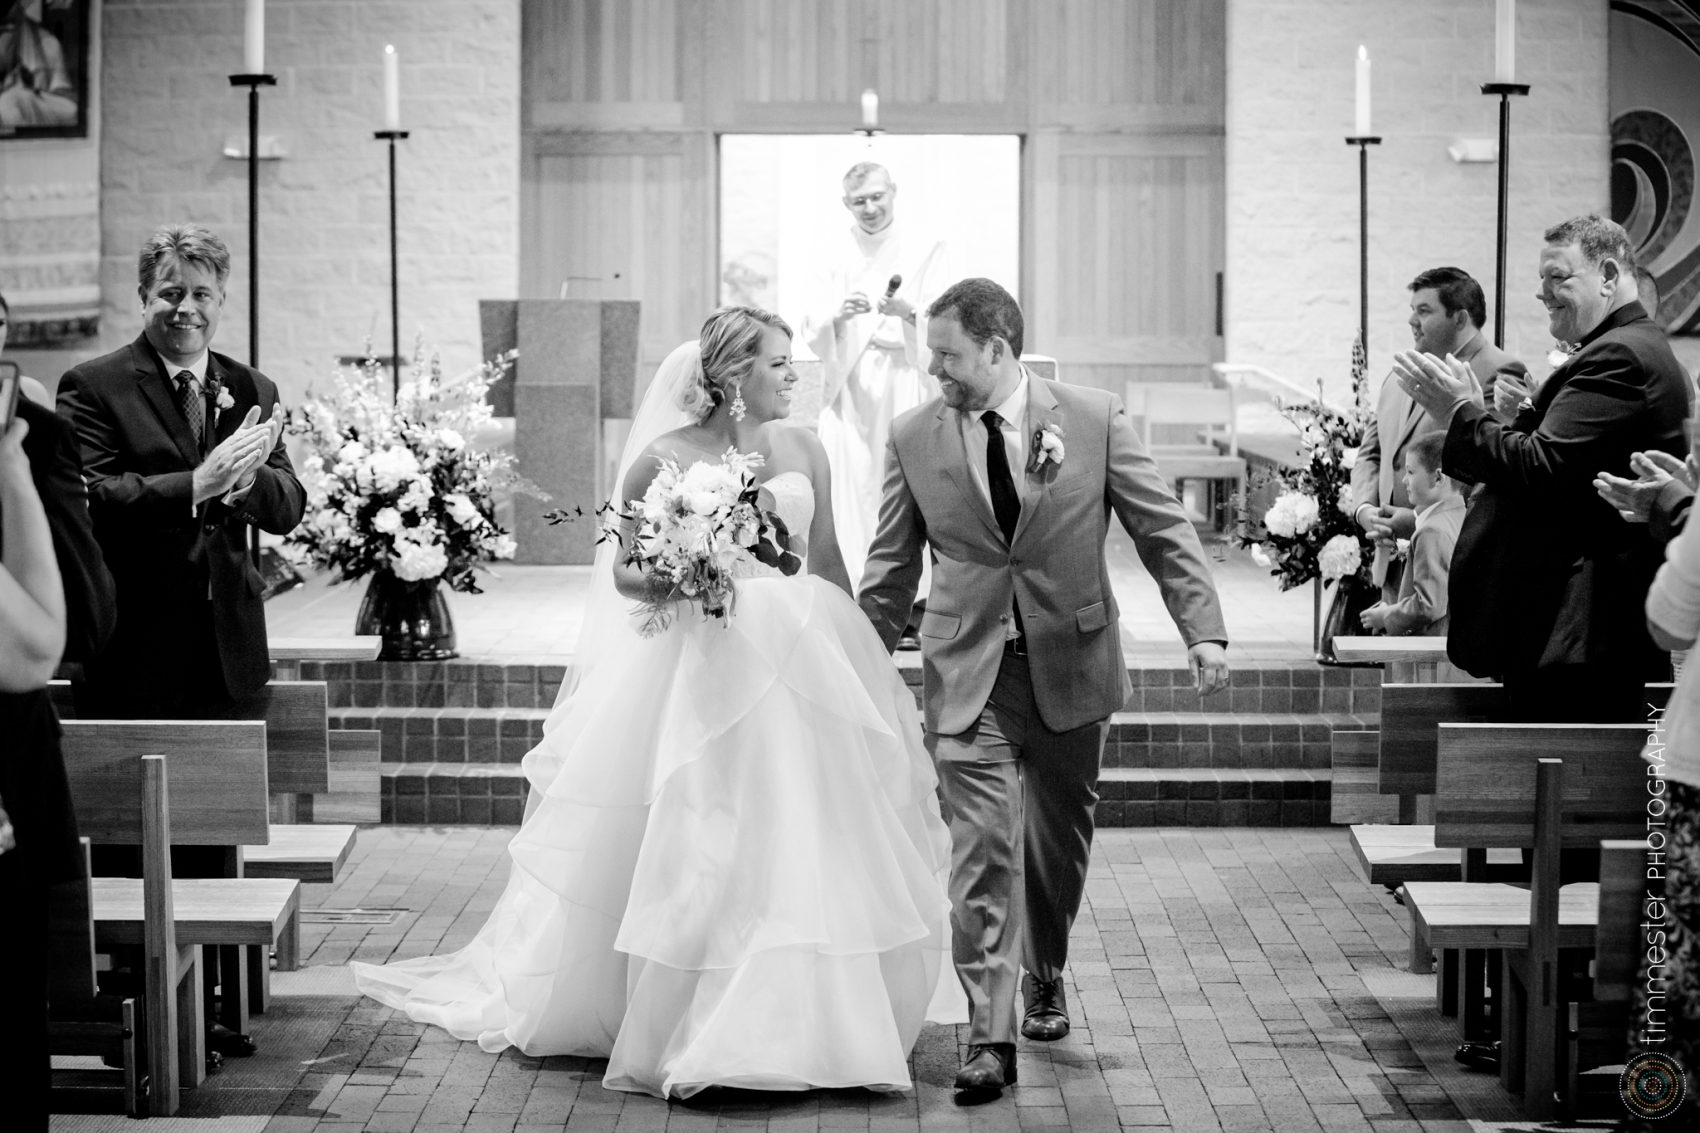 Wedding ceremony in Durham, North Carolina at Immaculate Conception Catholic Church.